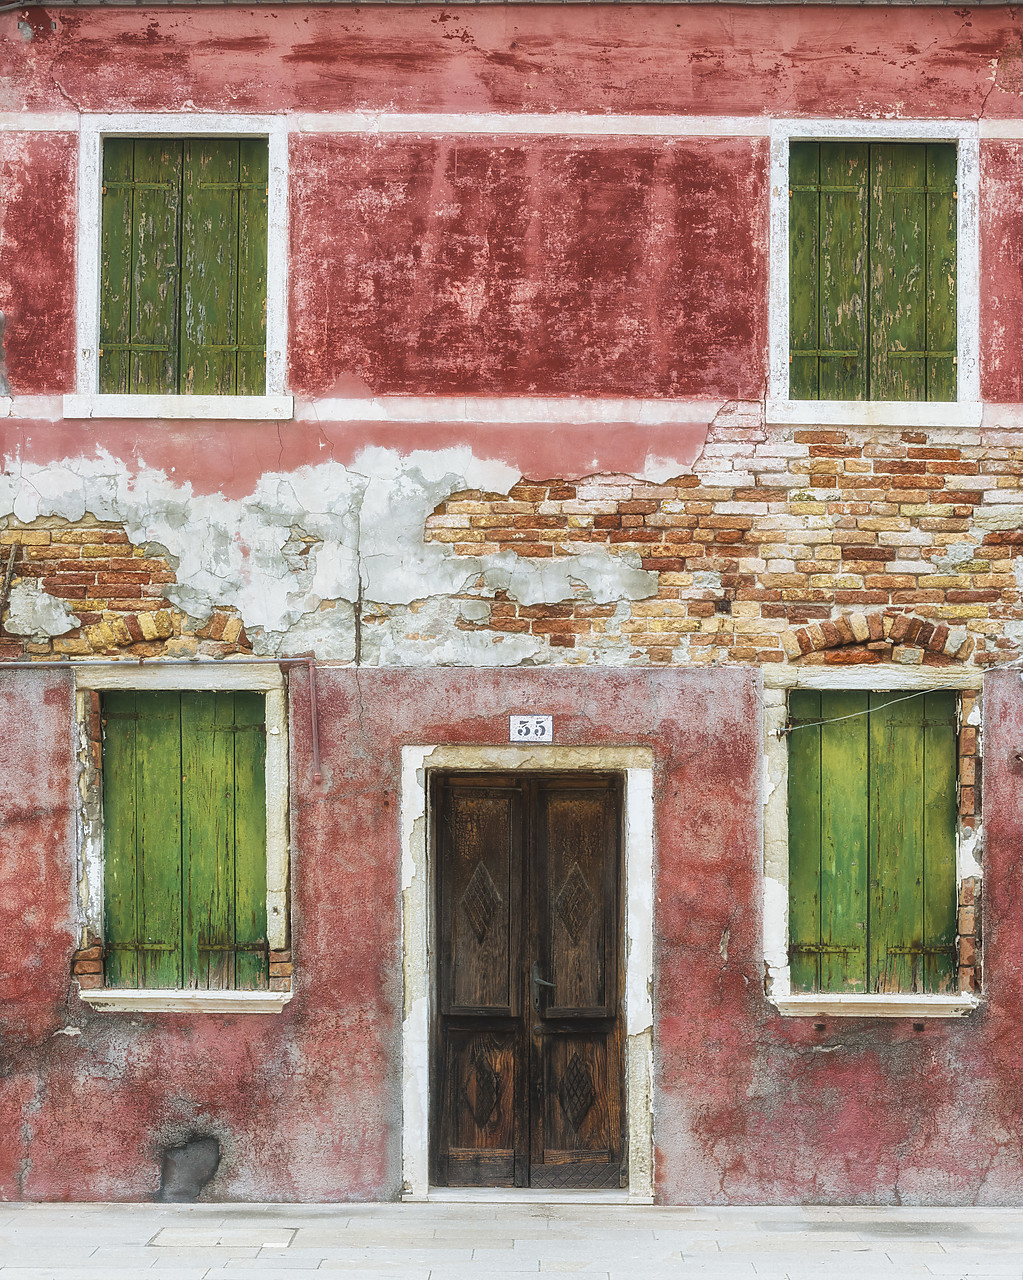 #140435-1 - Rustic Colourful Building, Burano, Venice, Italy